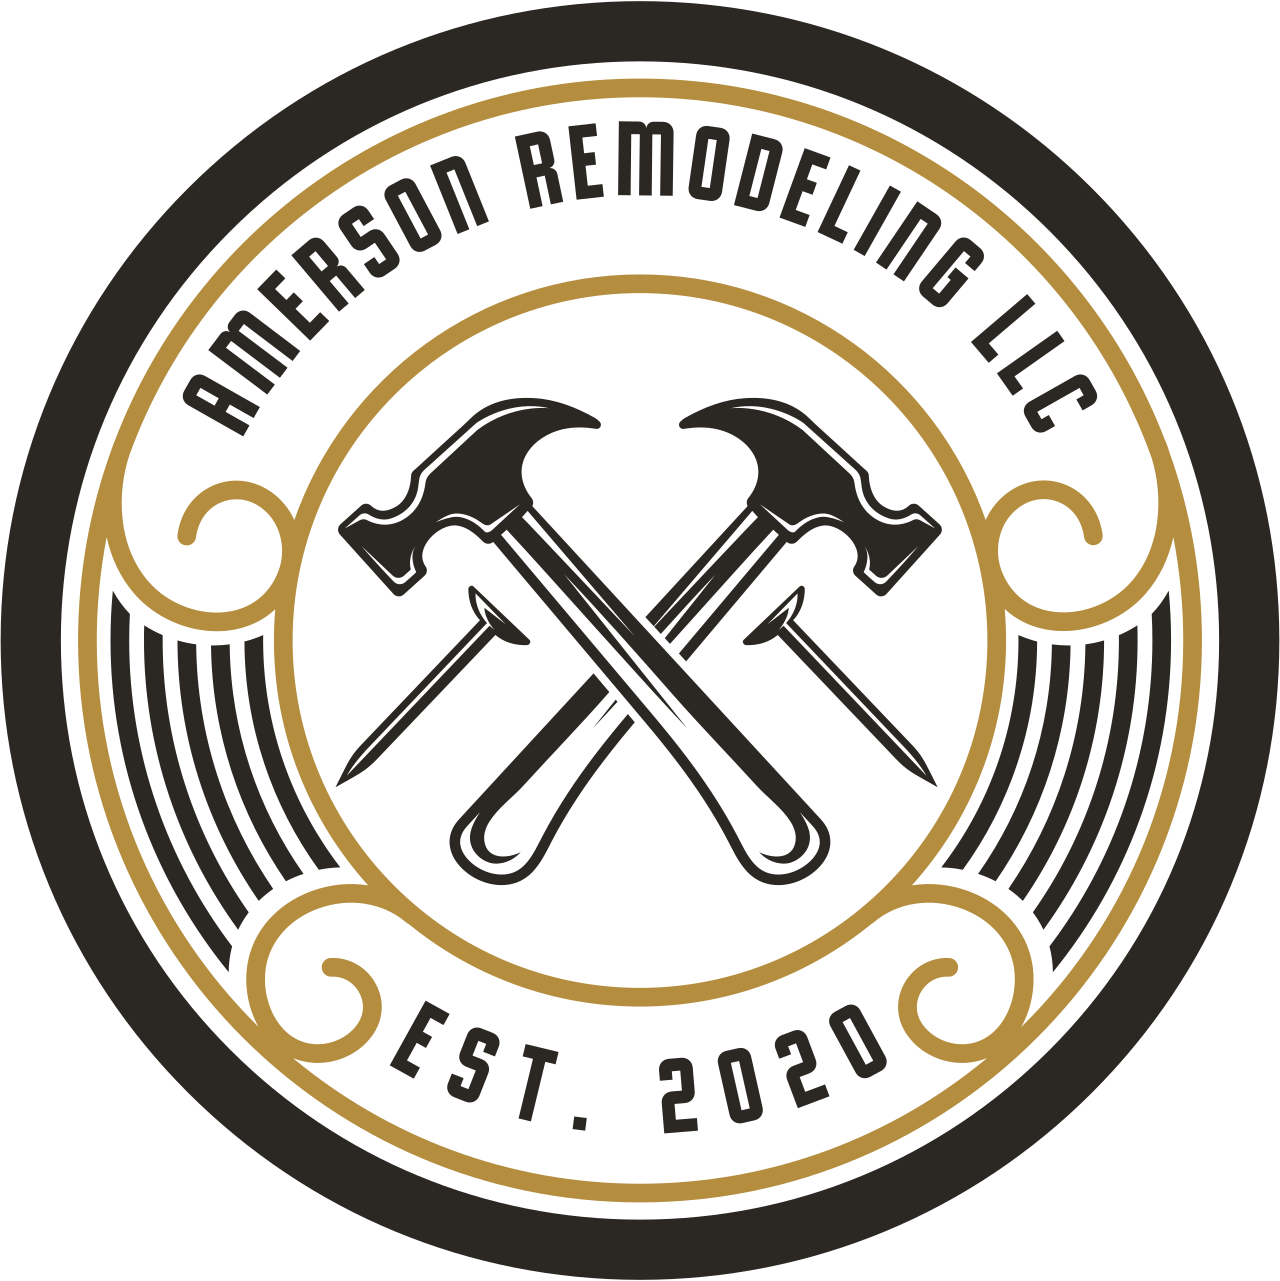 AMERSON REMODELING LLC's logo